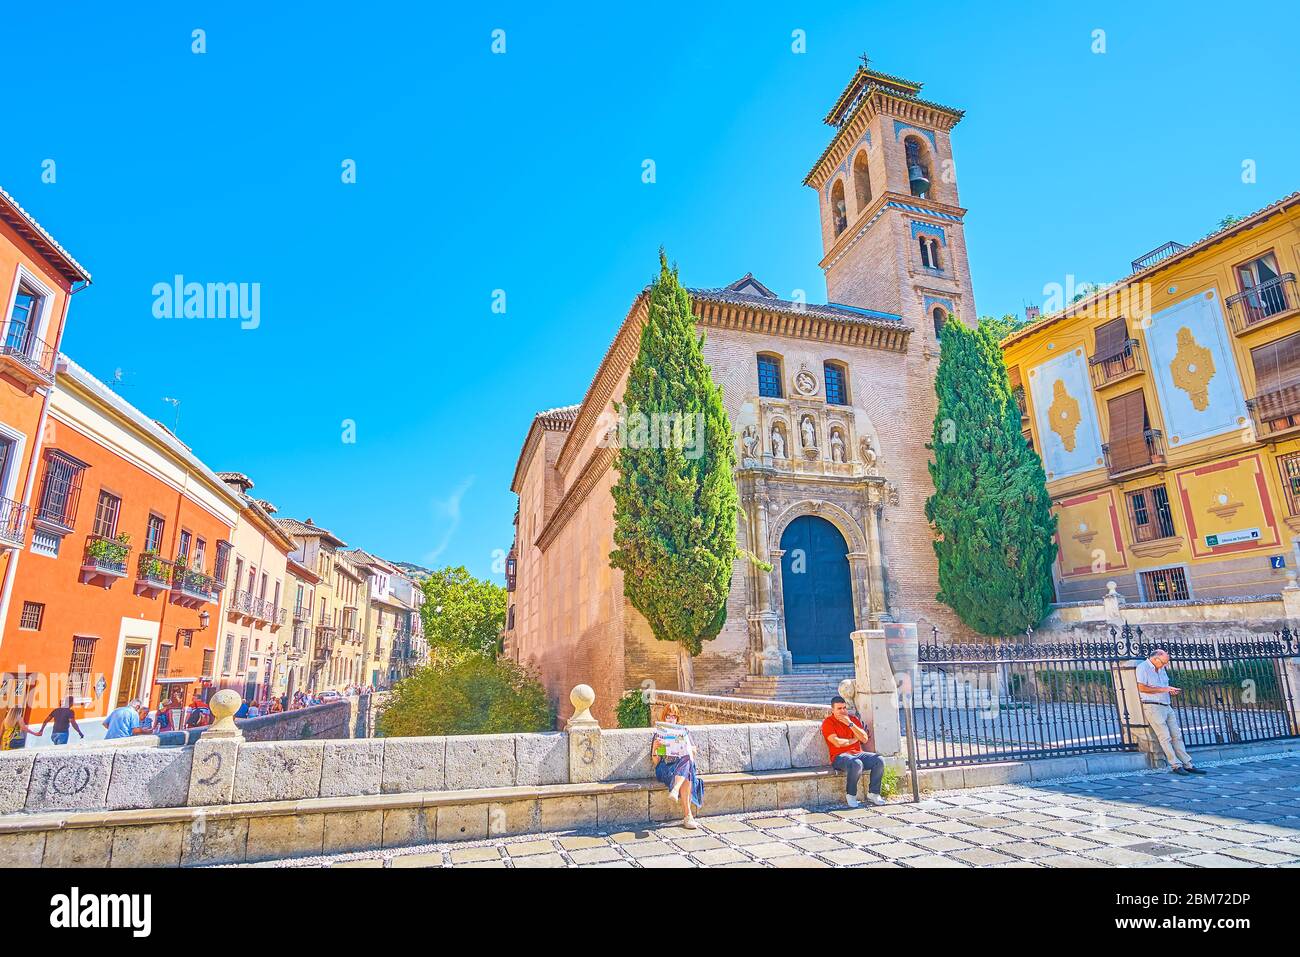 GRANADA, SPAIN - SEPTEMBER 25, 2019: The facade of medieval San Gil and Santa Ana church, located in Plaza Santa Ana square of historic Arabic Albaici Stock Photo